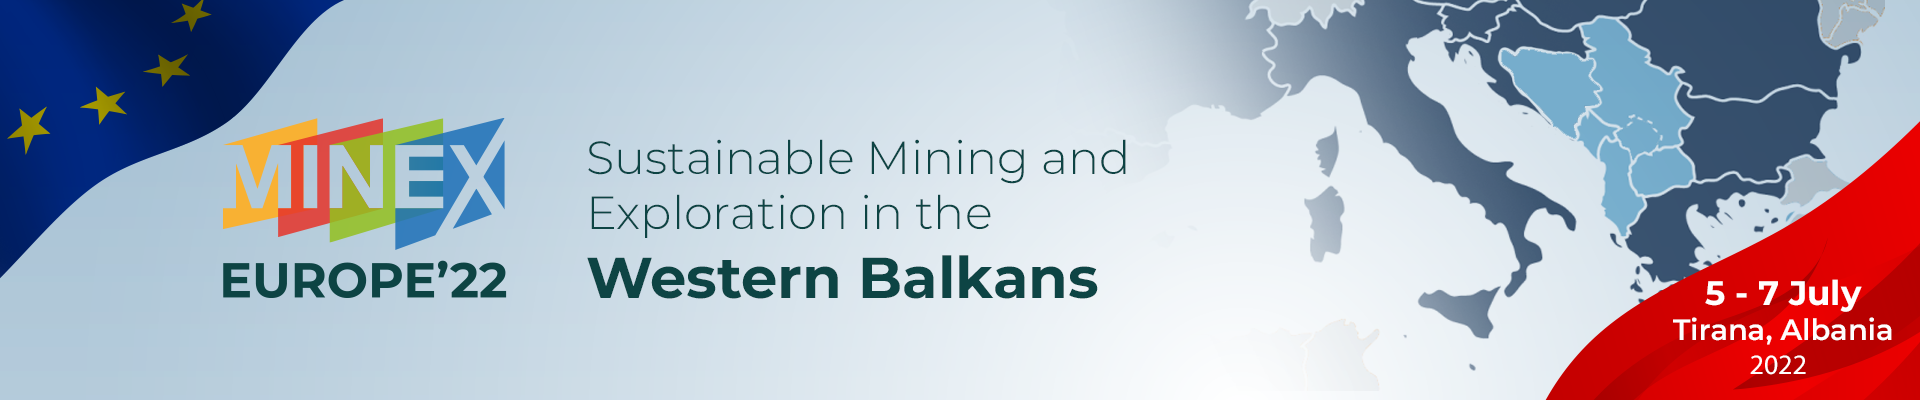 MINEX Europe Mining & Exploration Forum 